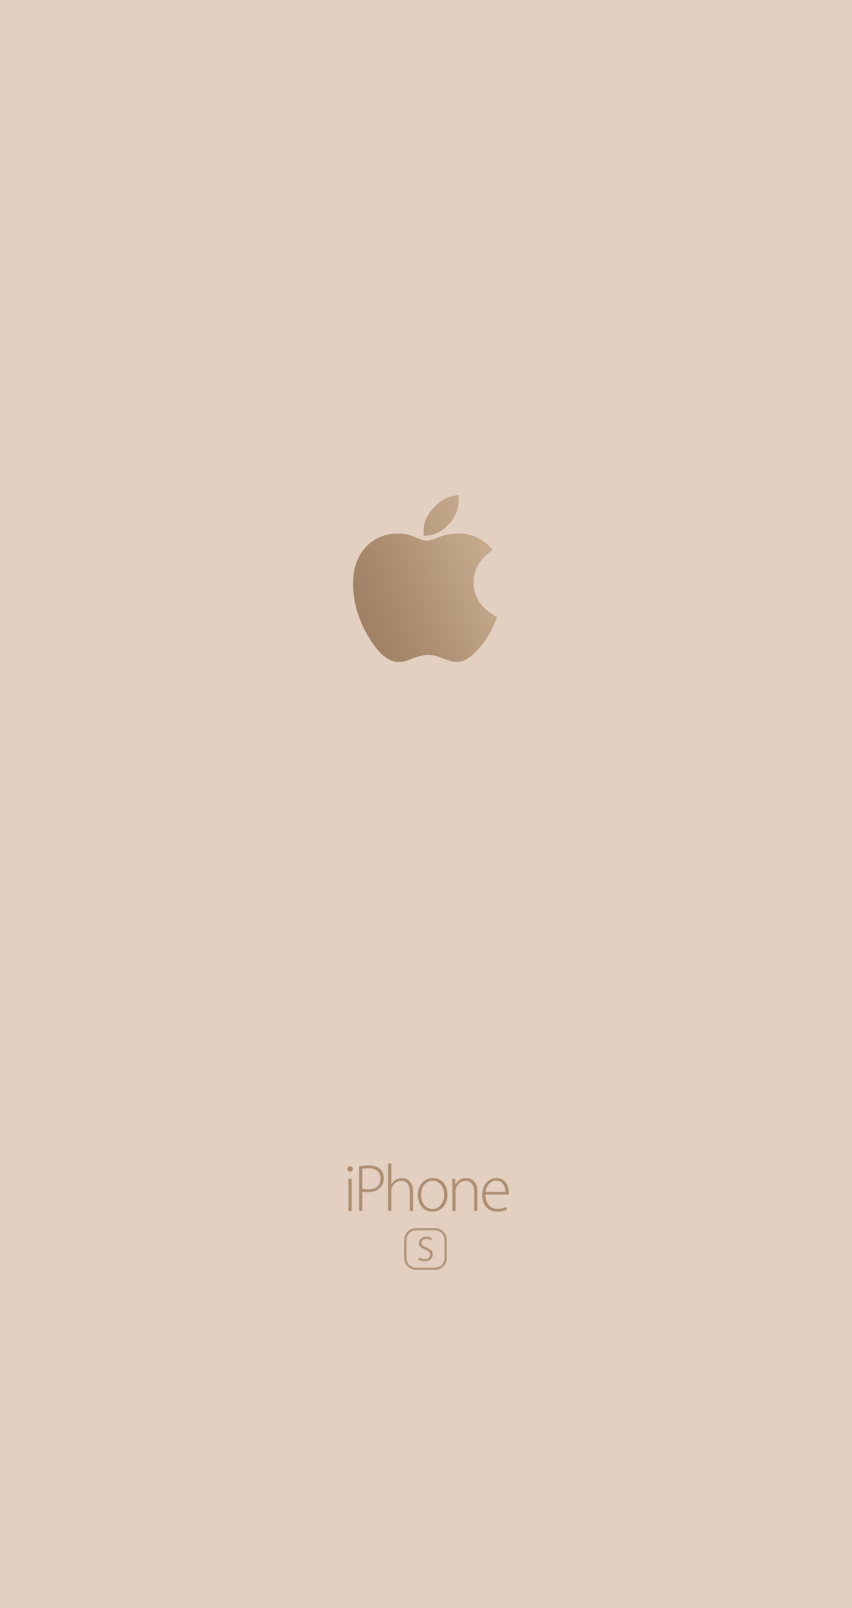 Gold iPhone Logo - iPhone 6s Wallpaper gold logo apple fond d'écran or. iPhone SE